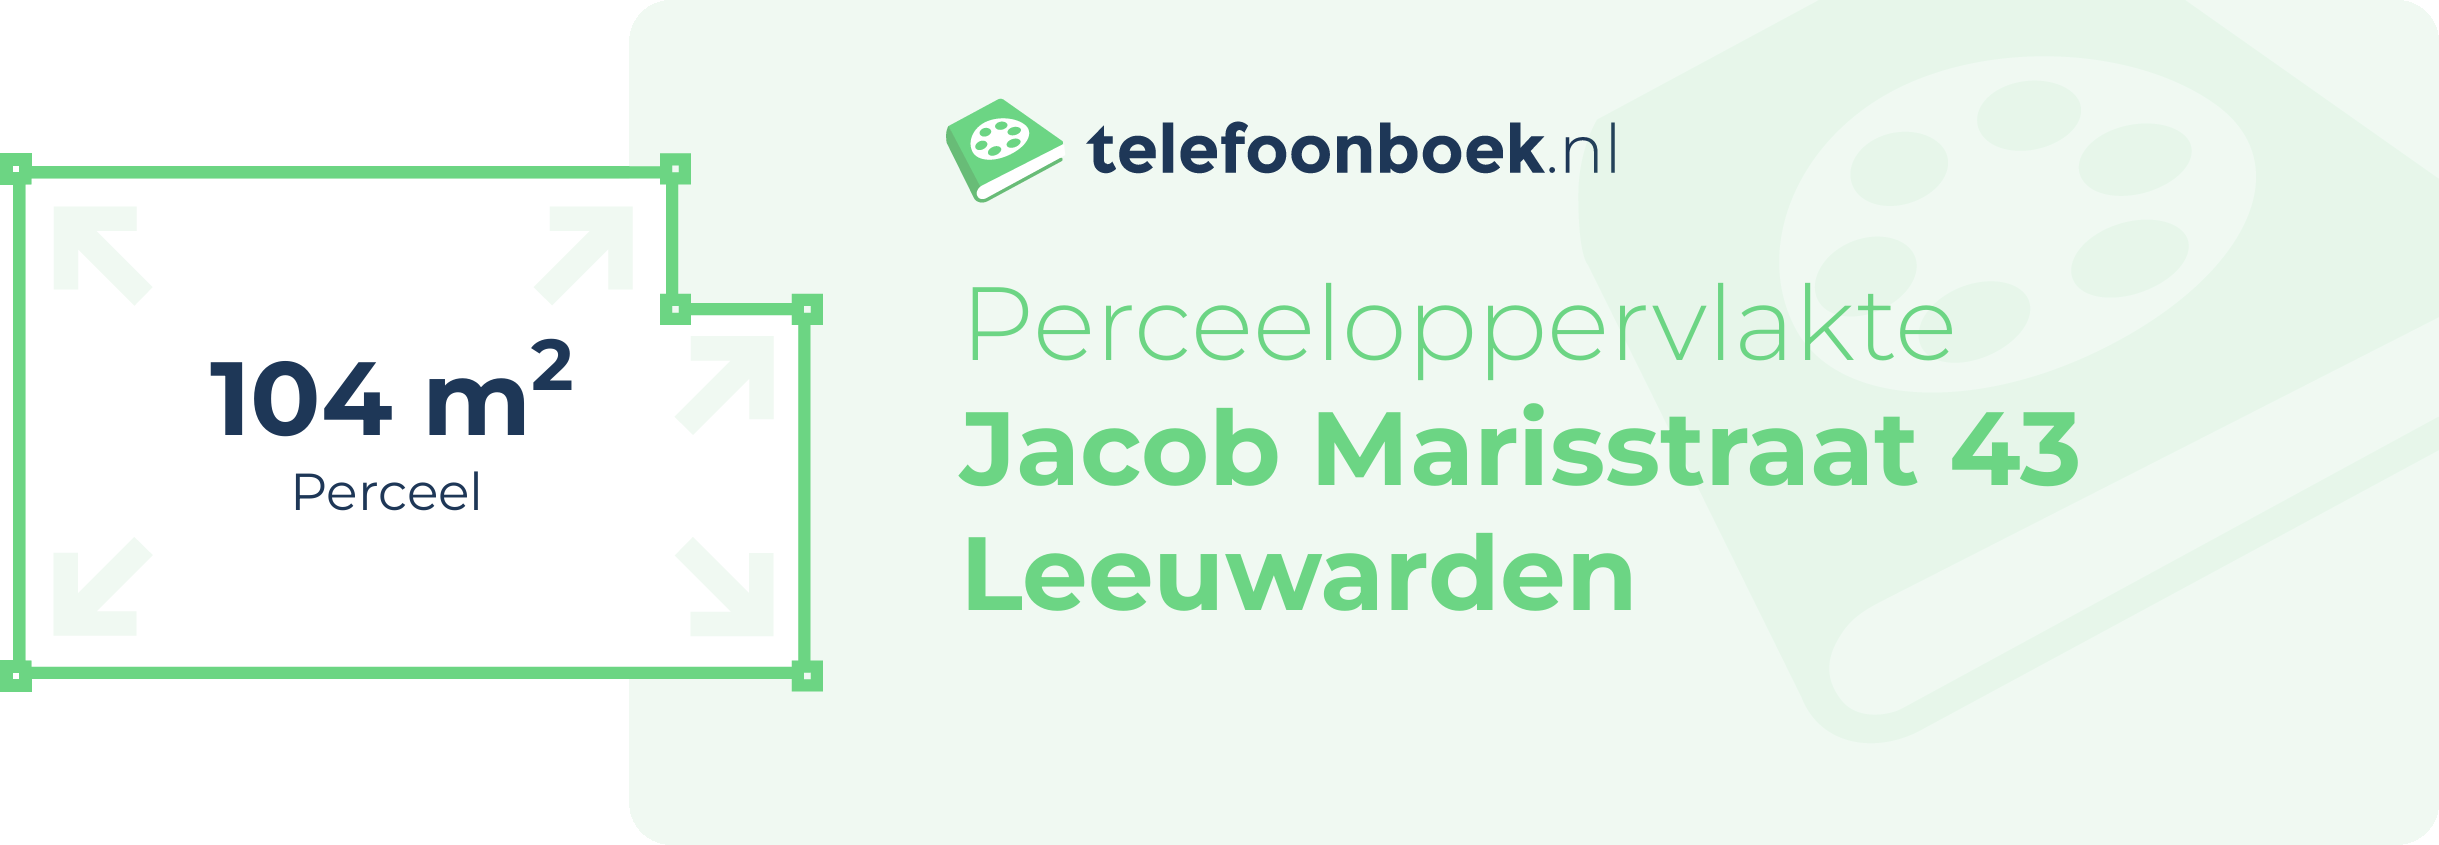 Perceeloppervlakte Jacob Marisstraat 43 Leeuwarden